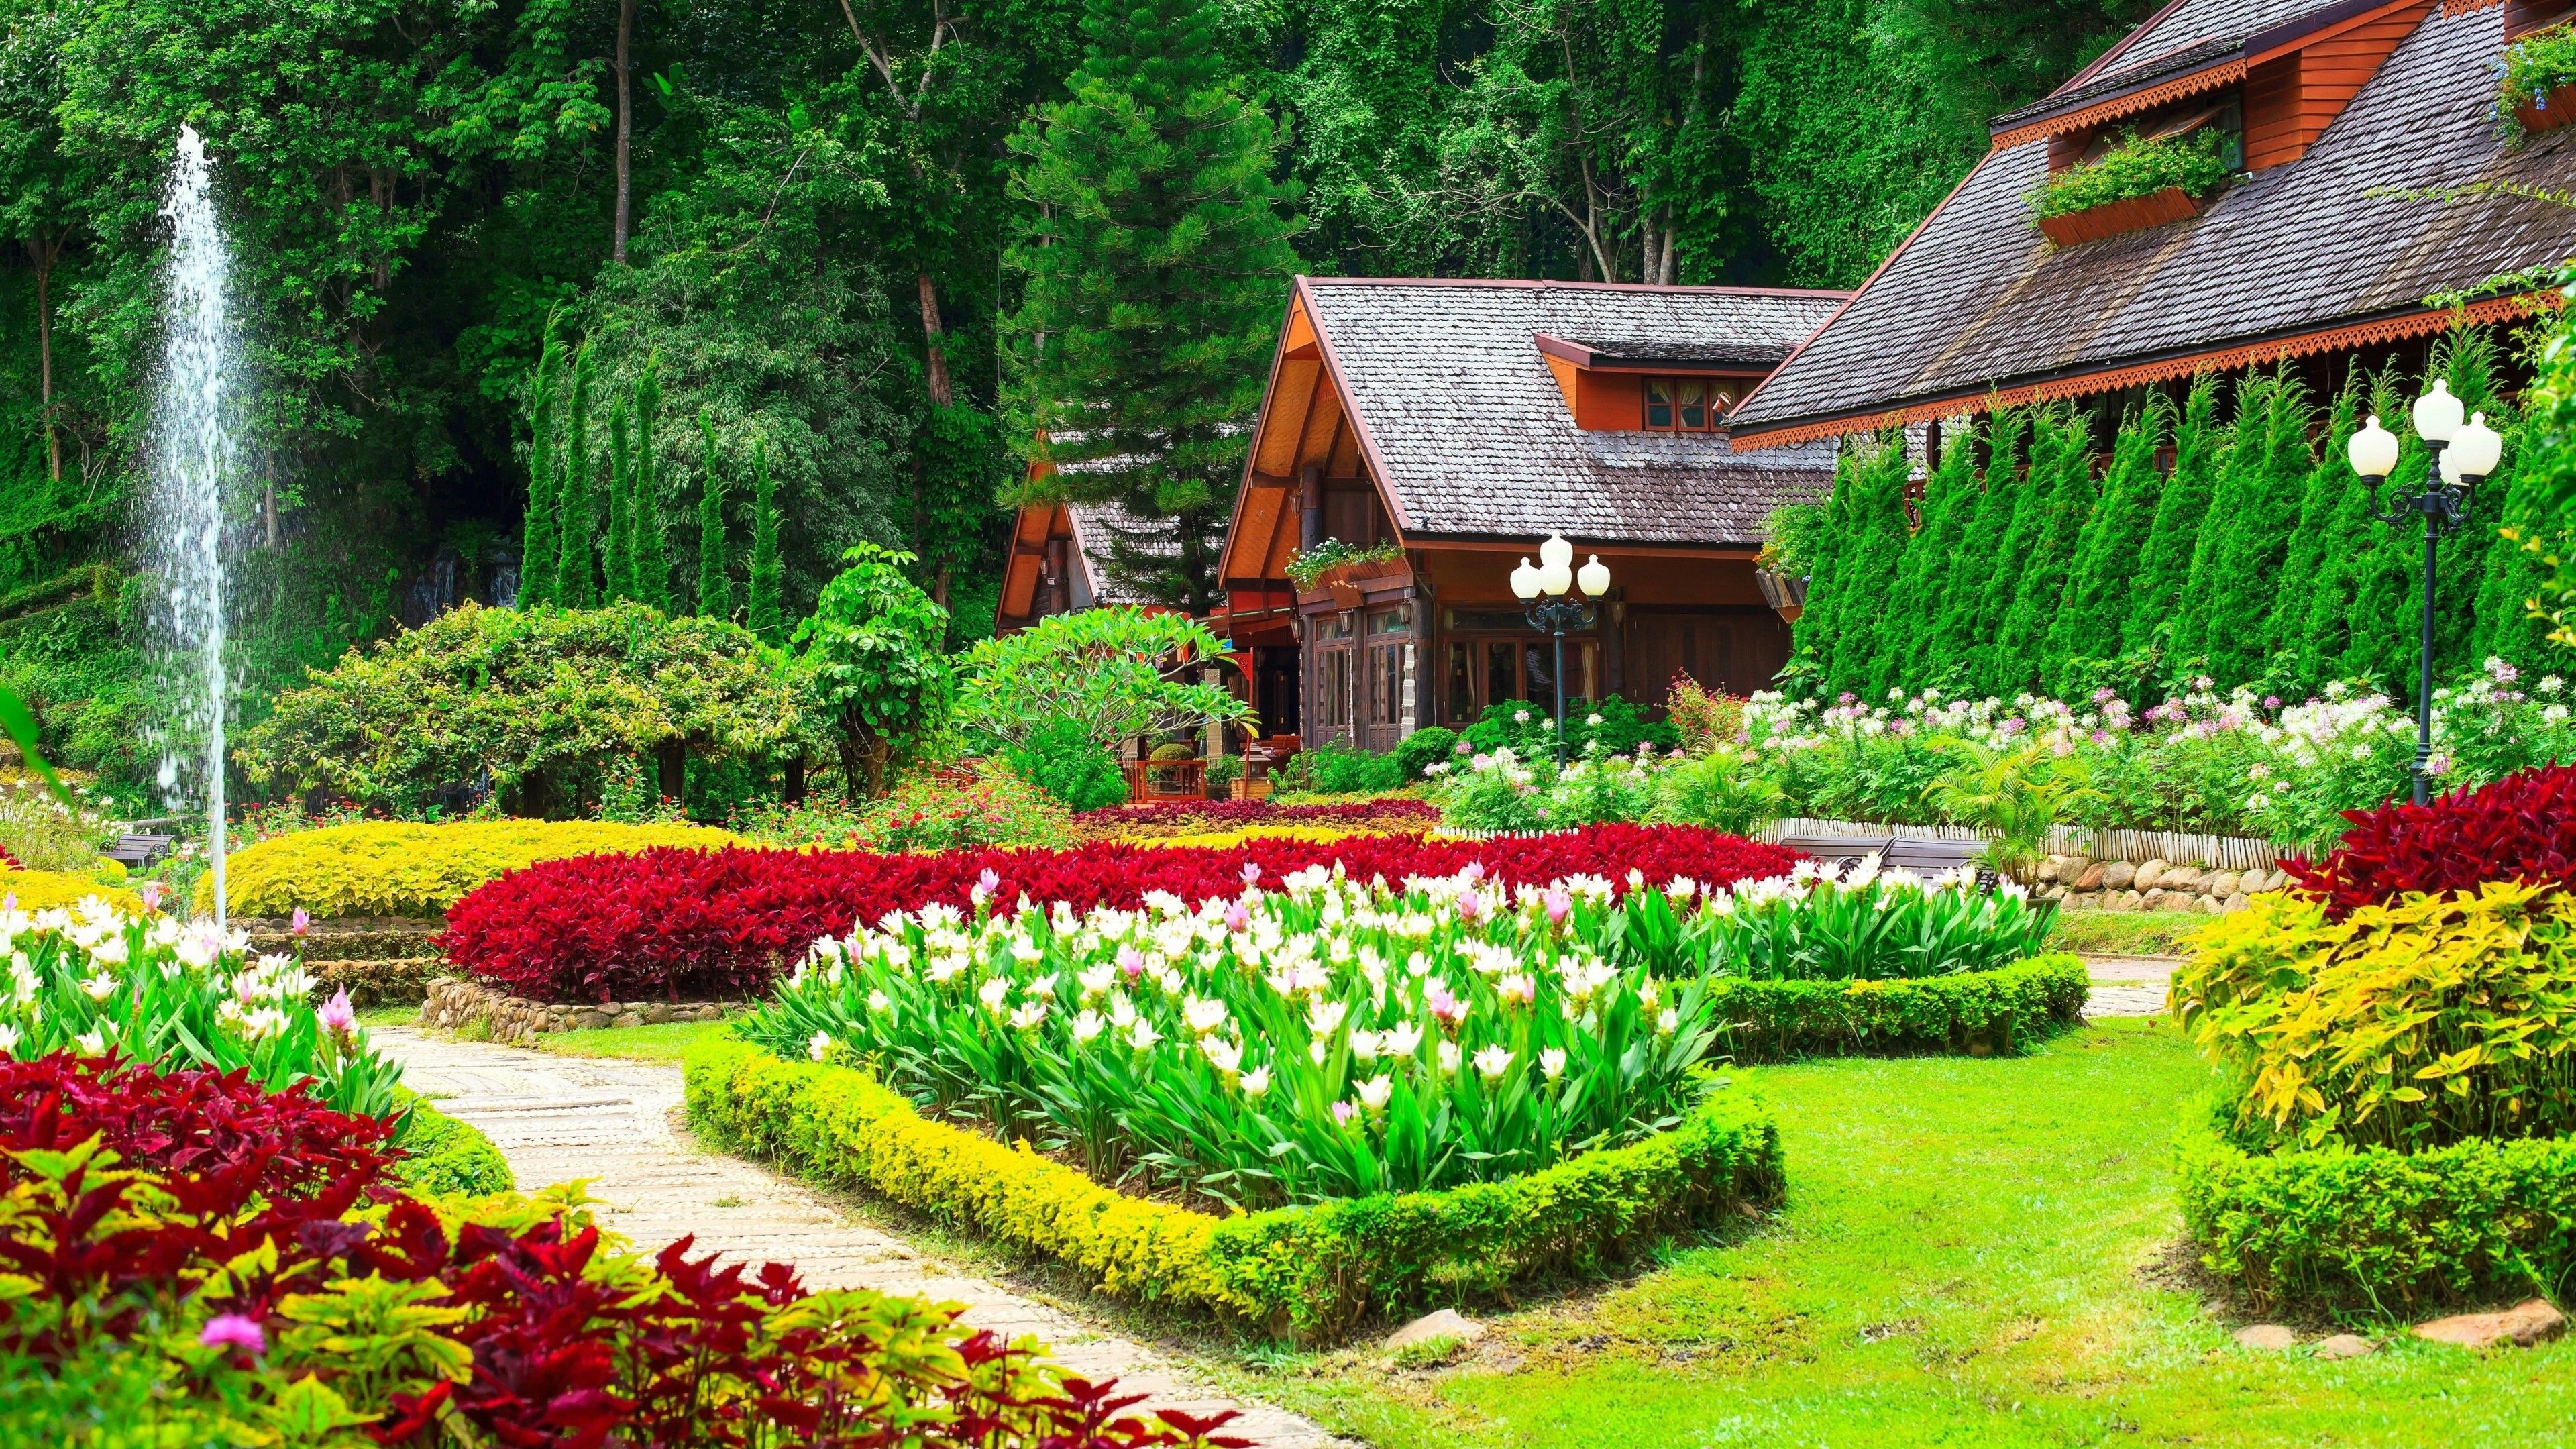 Country house, Flower-filled, Vibrant gardens, Idyllic setting, 3840x2160 4K Desktop